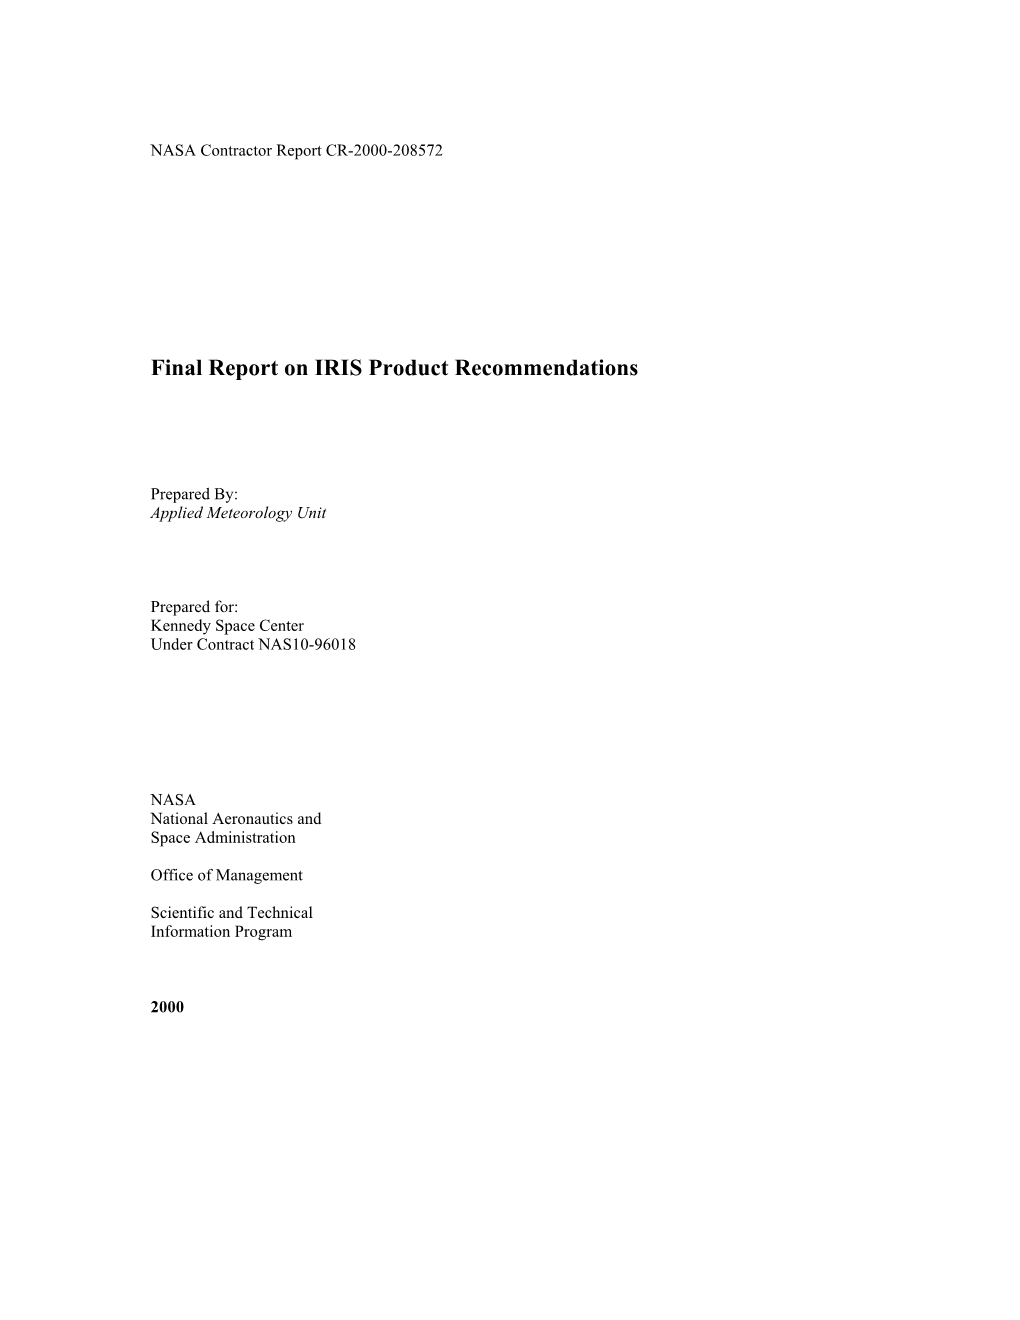 Final Report on Prototype Sodar Evaluation